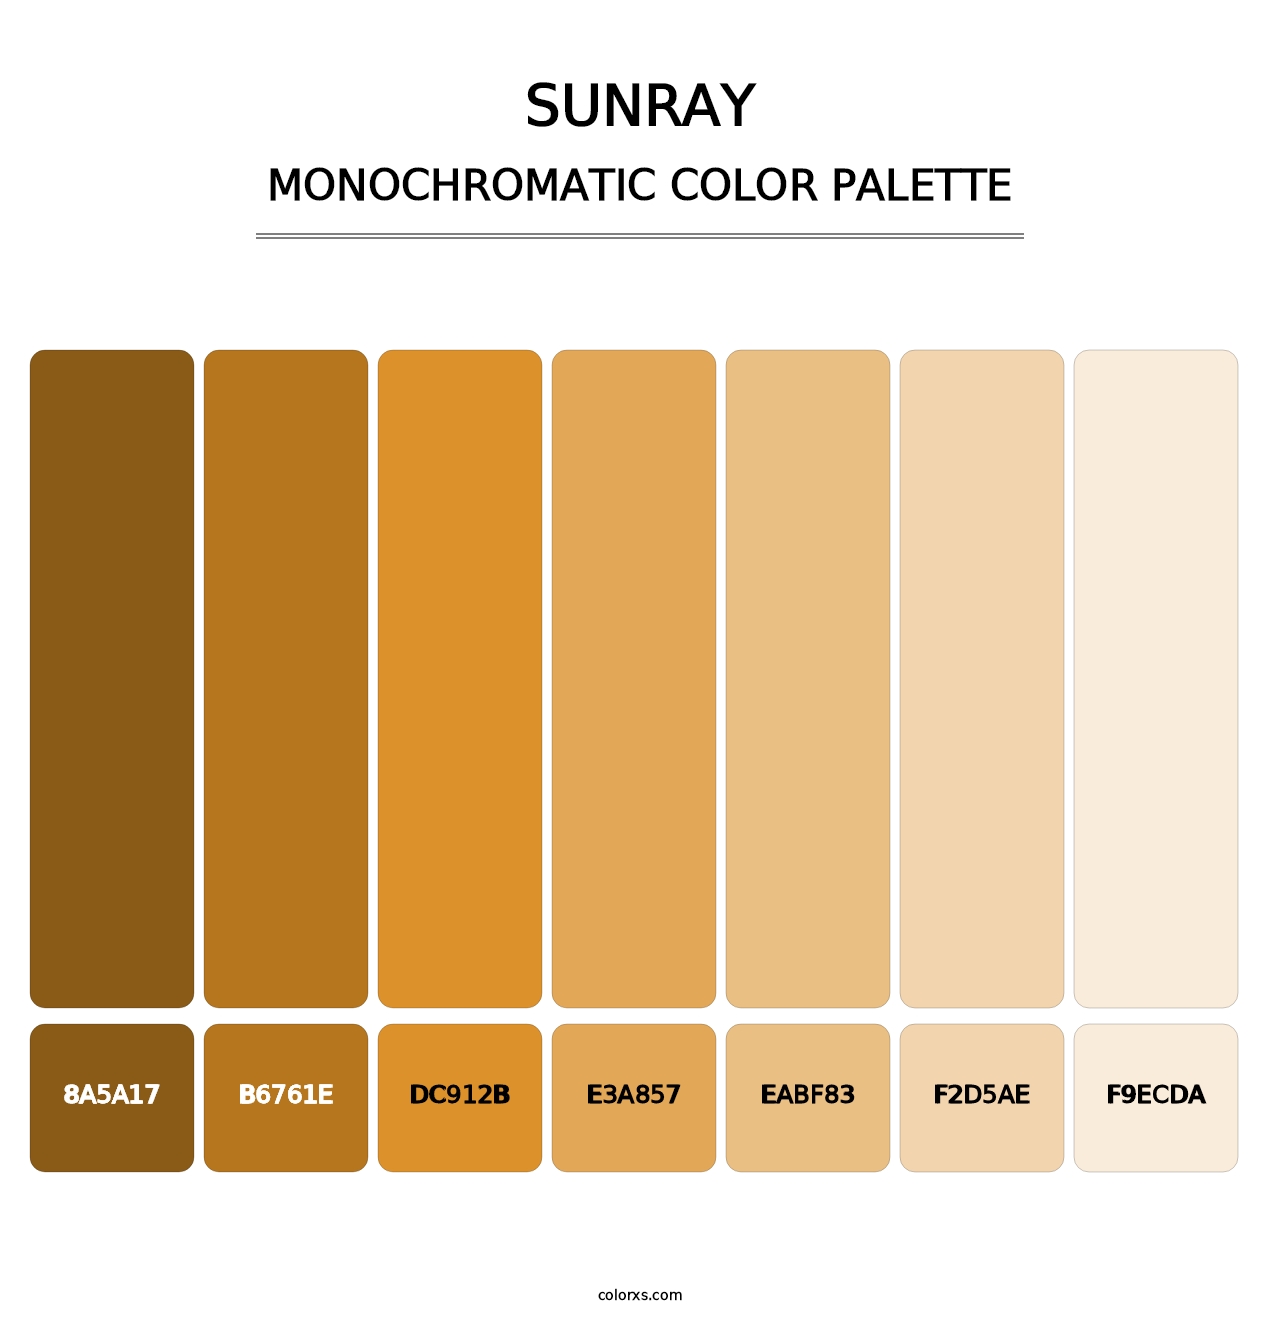 Sunray - Monochromatic Color Palette